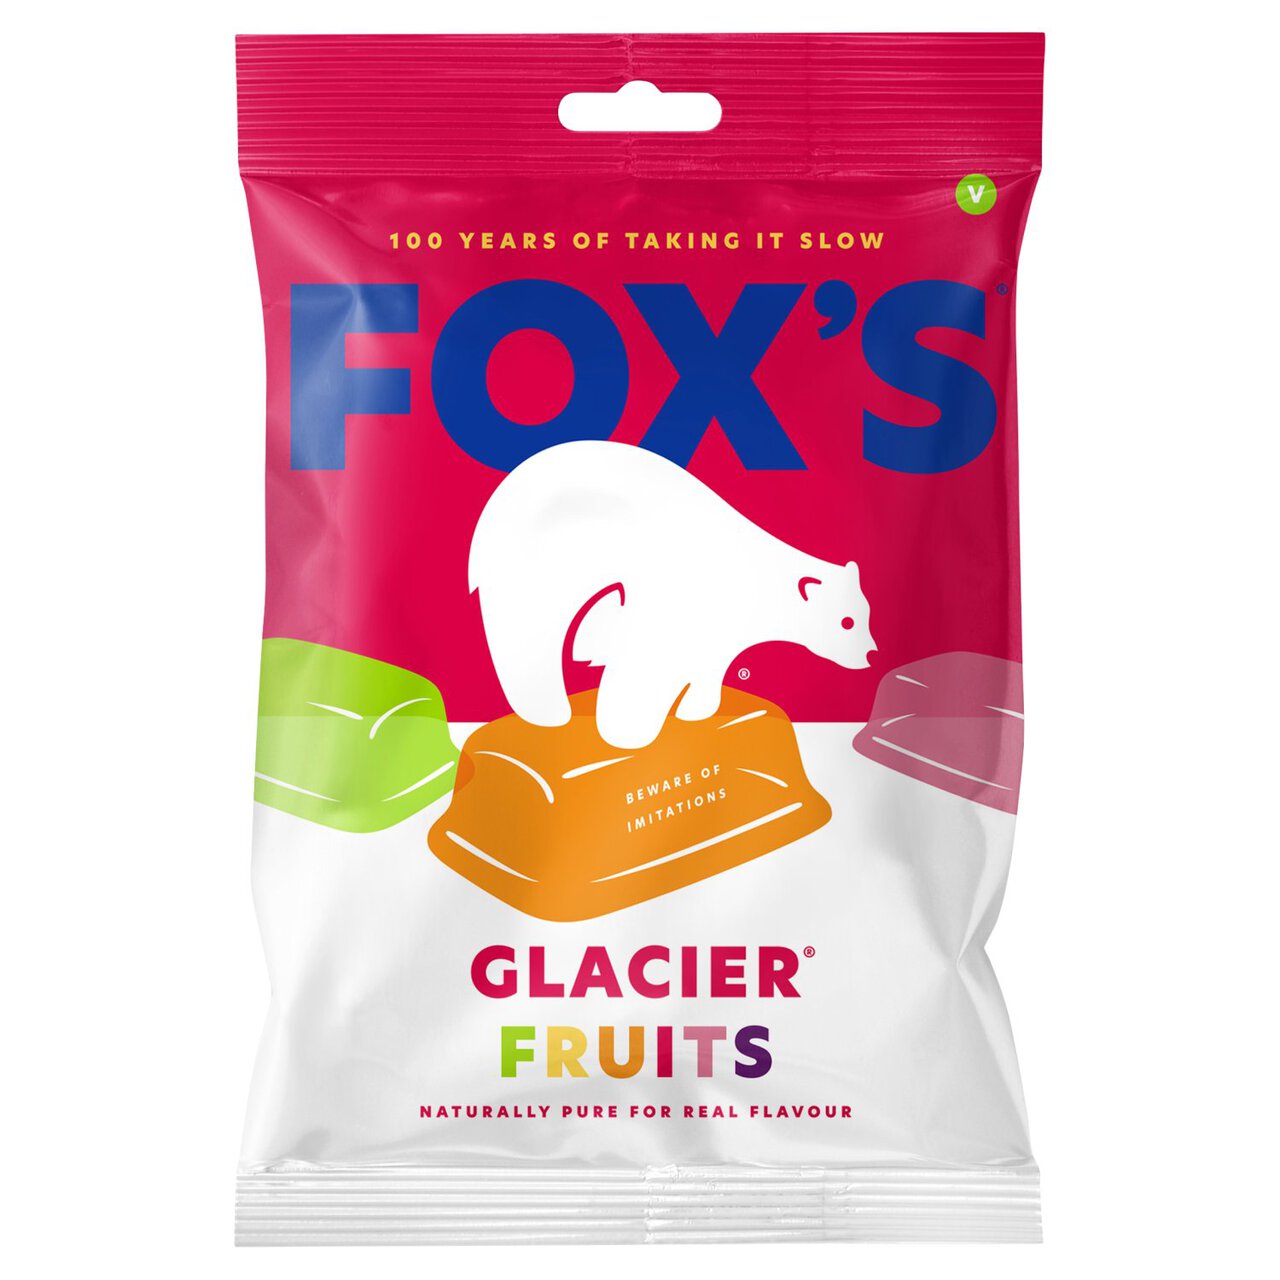 Fox's Glacier Fruits 200g